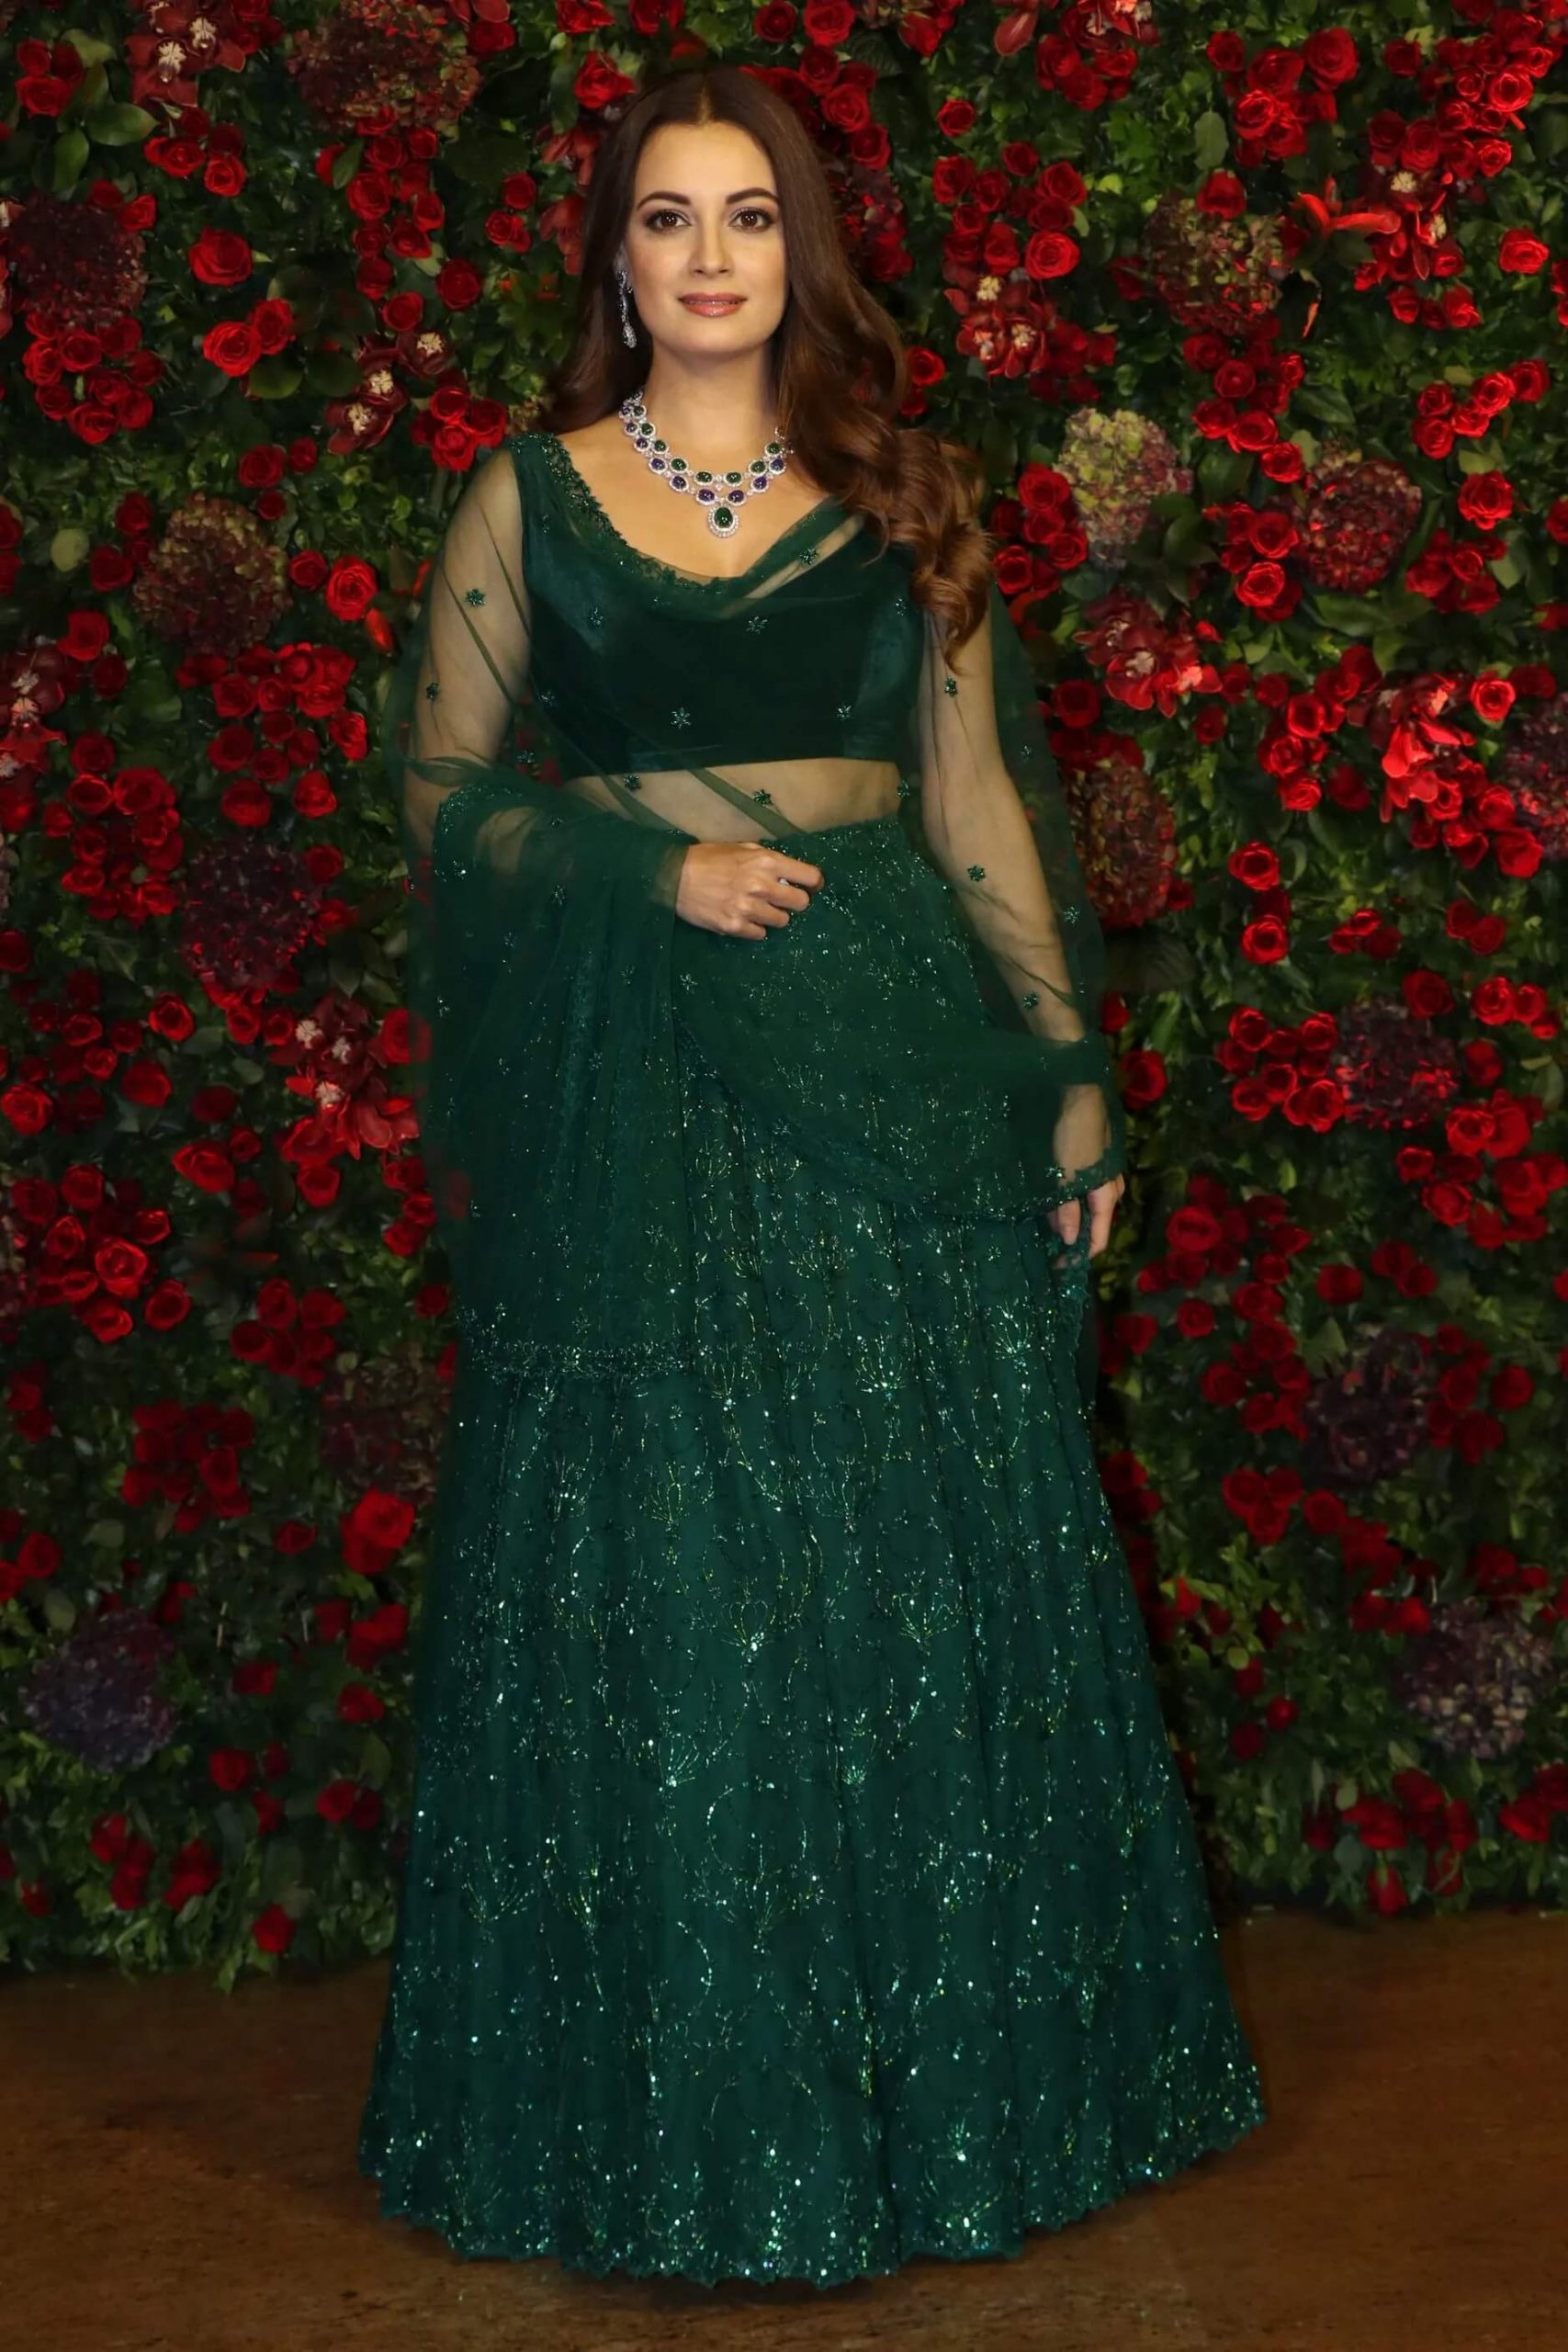 At Deepika And Ranveer's wedding, Dia wore a Bottle Green lehenga set with a sheer dupatta